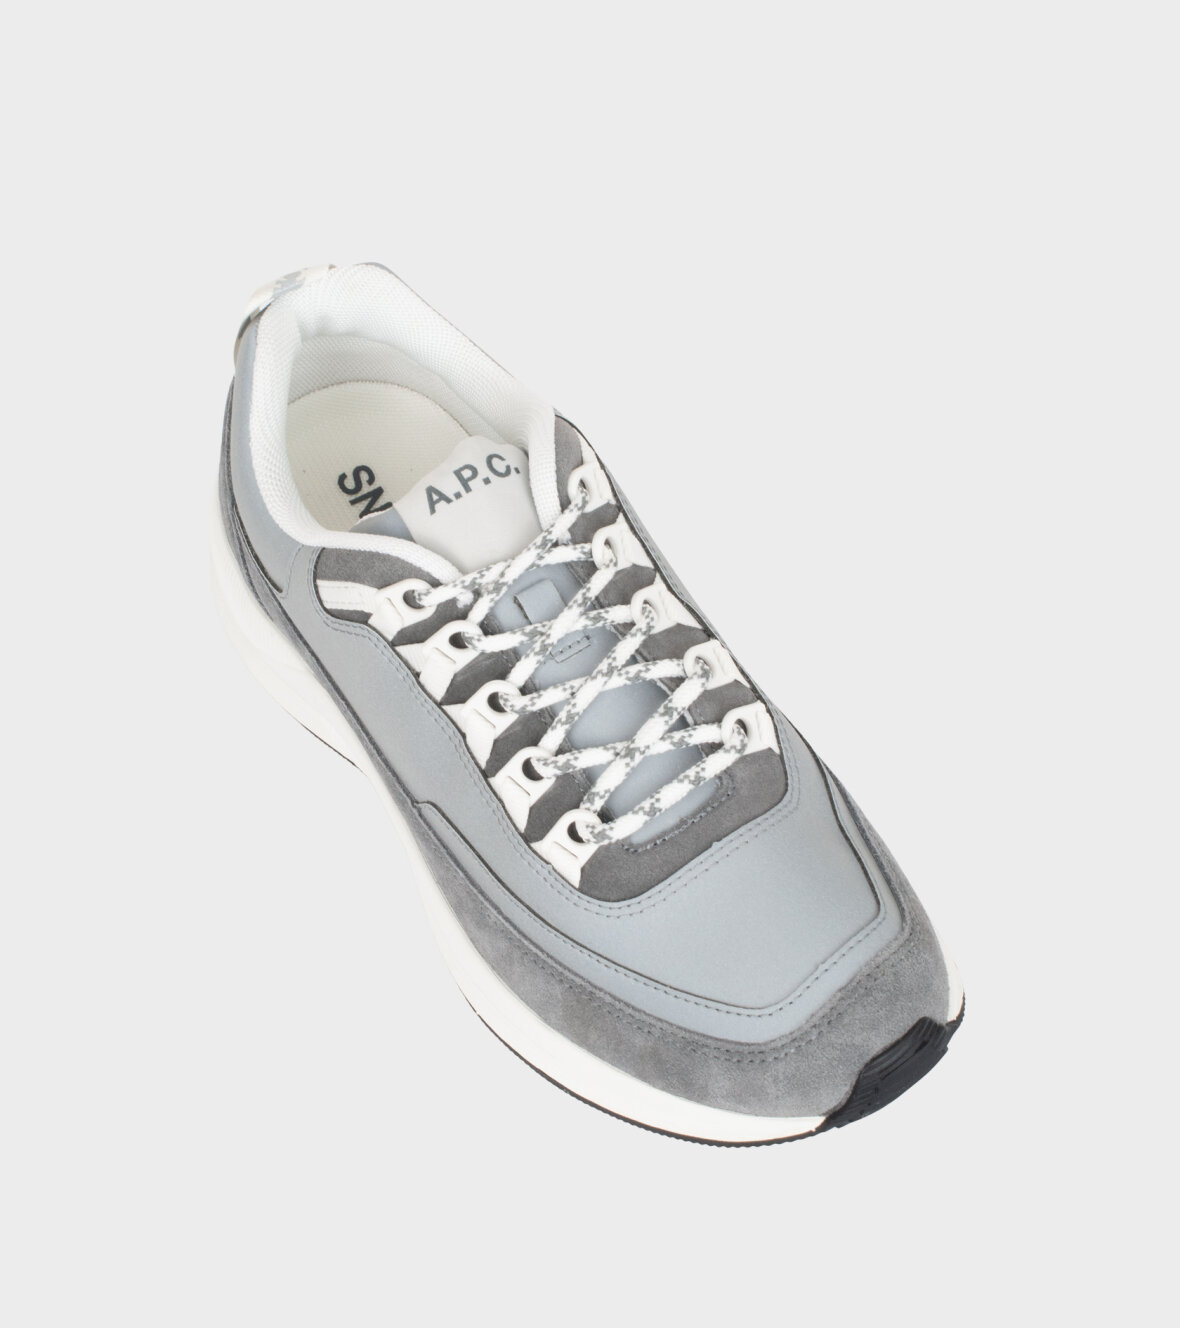 Adams - Shoes - A.P.C - Jay Rab Sneakers Grey